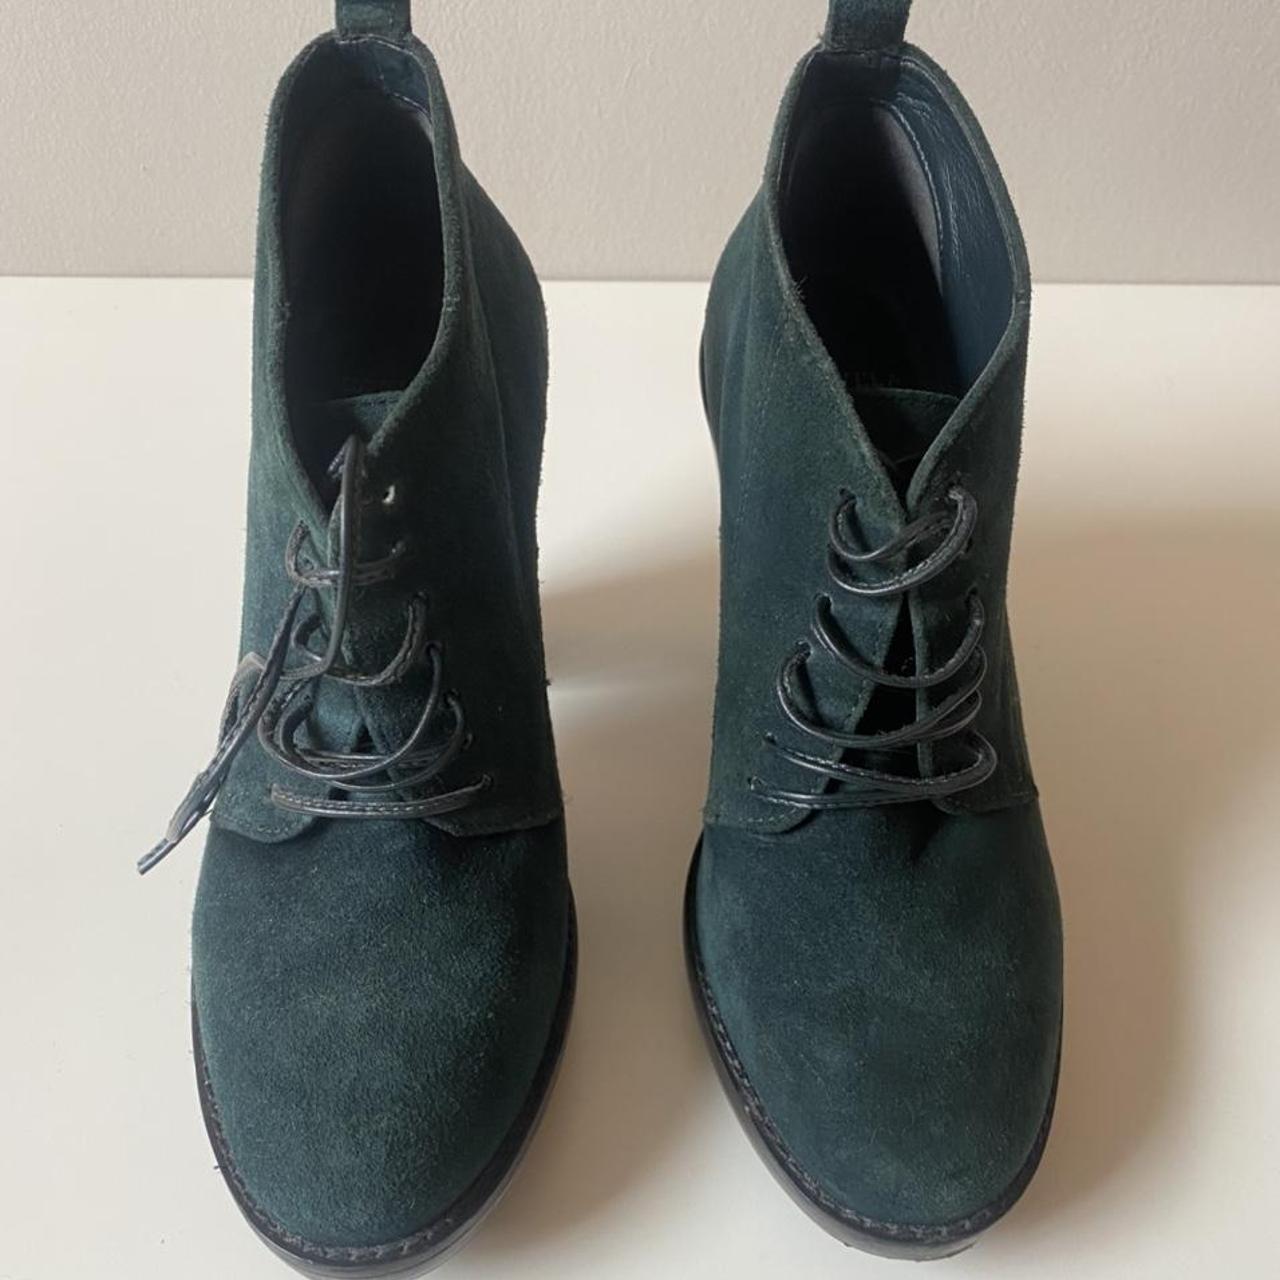 Carvela bottle green suede lace up shoe boots Size... - Depop